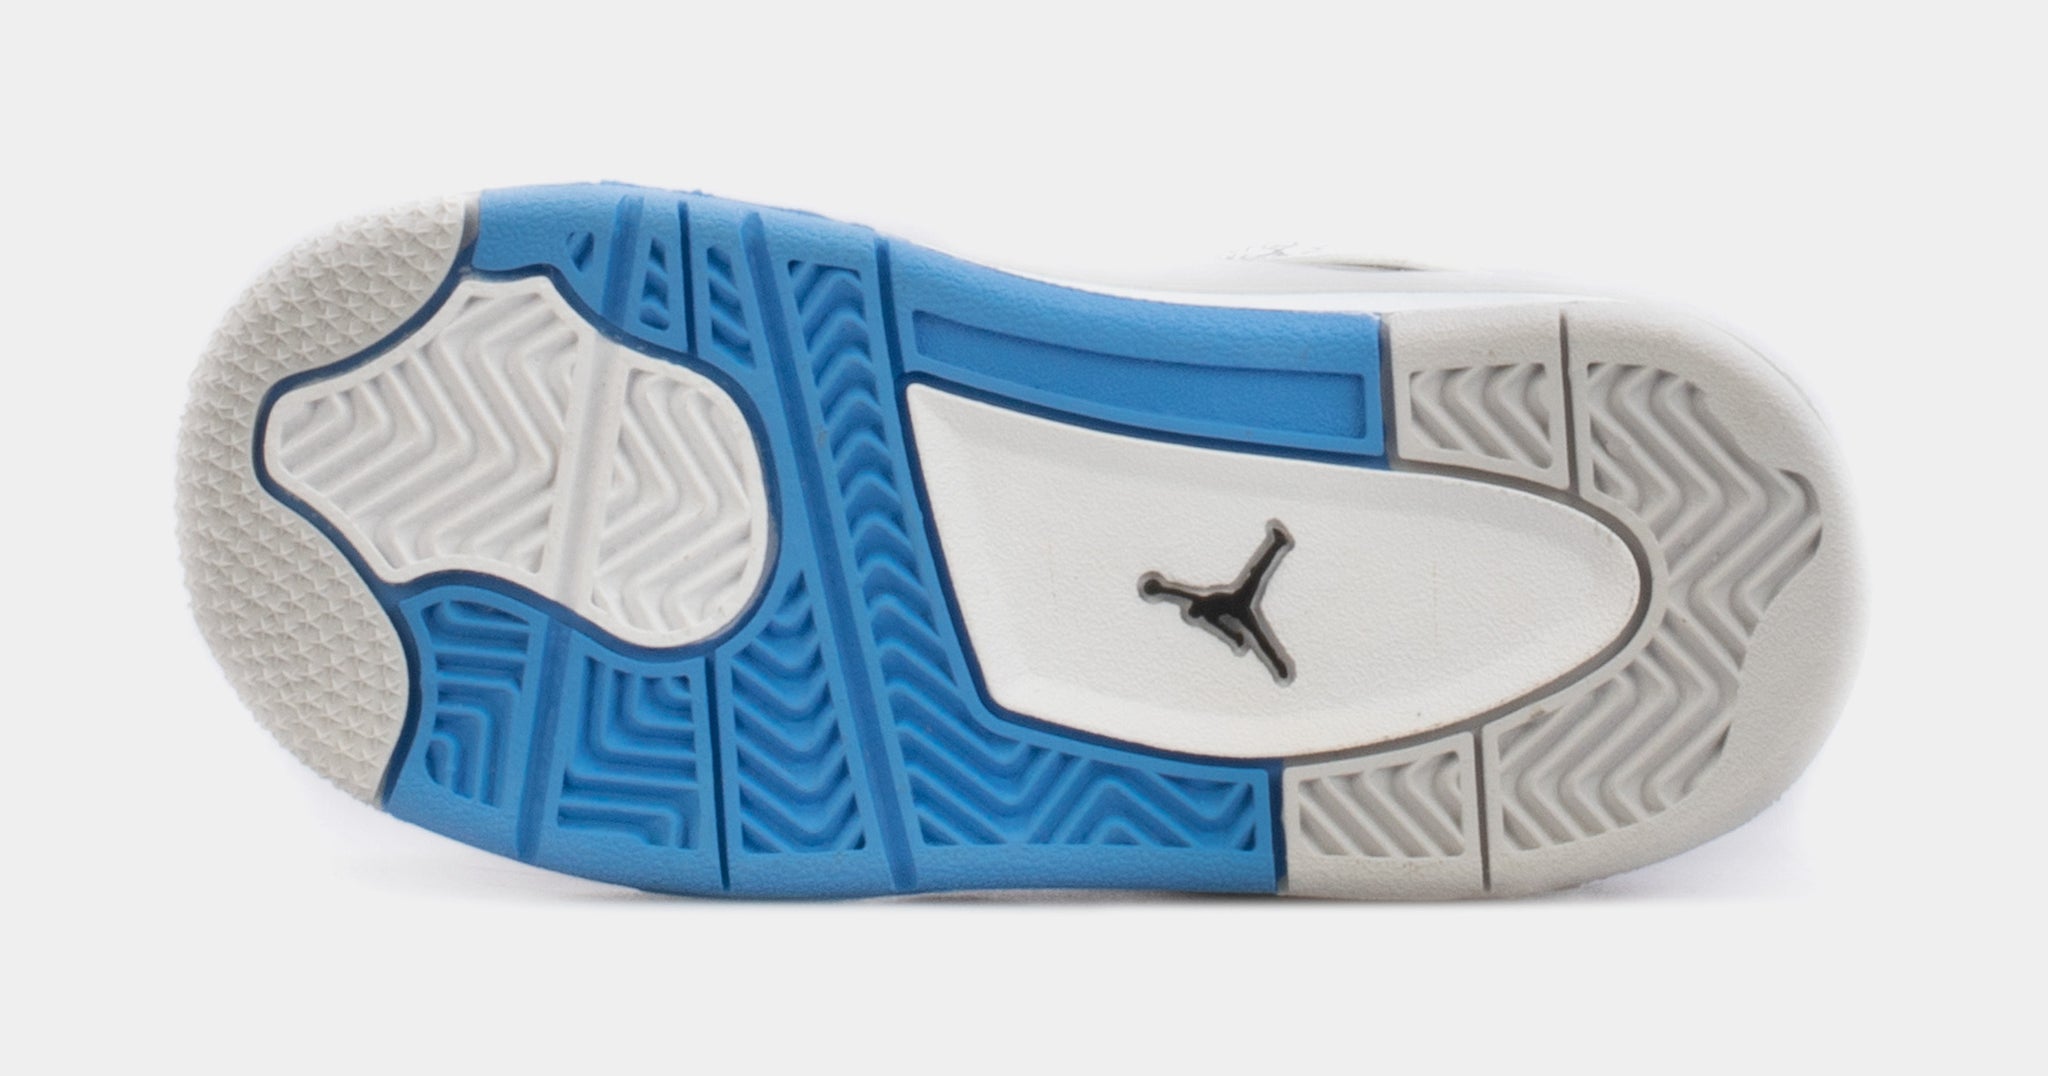 Air Jordan Dub Zero Infant Toddler Basketball Shoes (White/Blue)